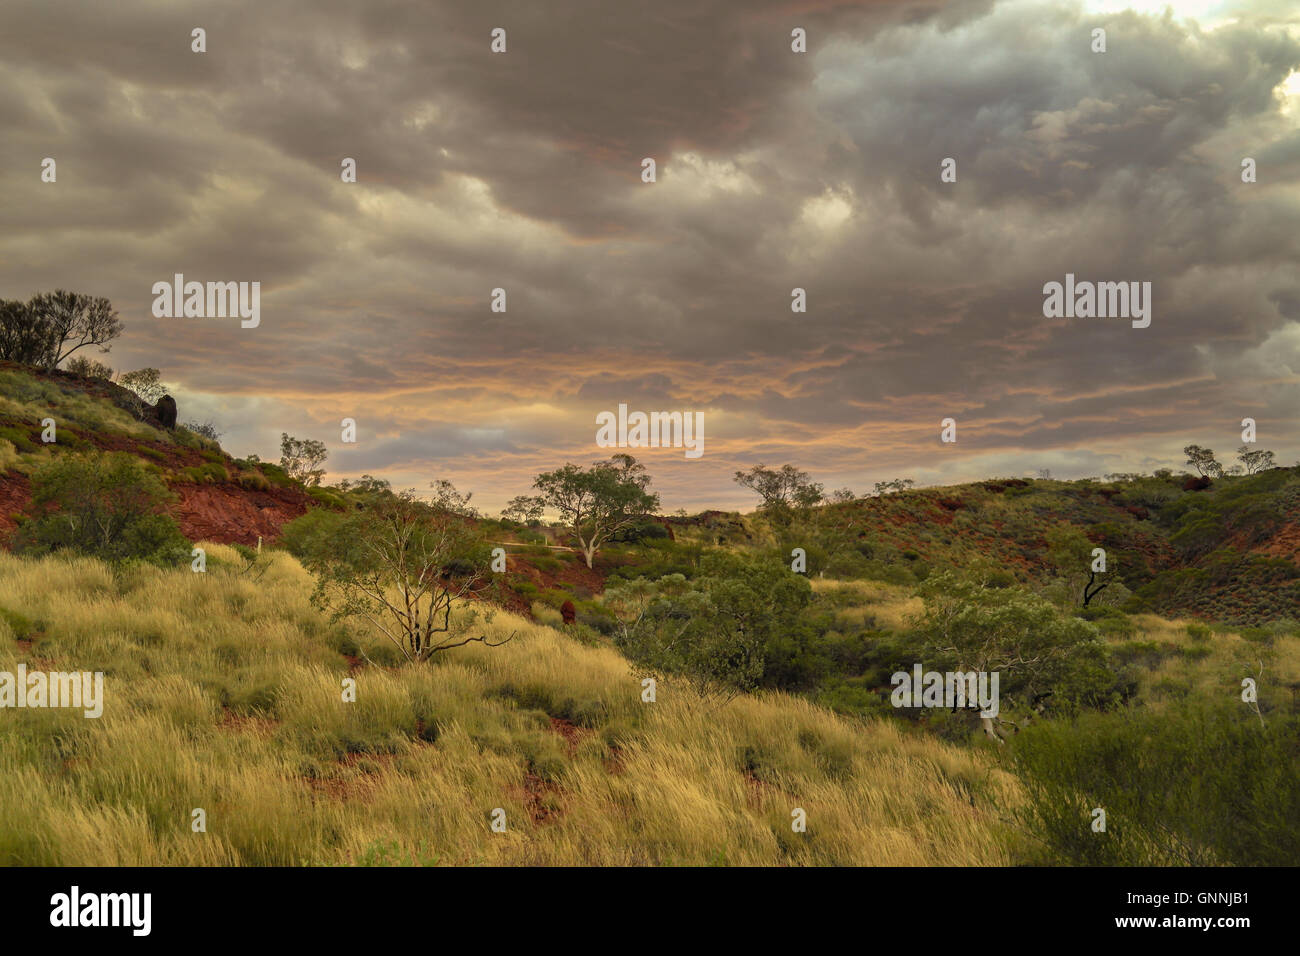 Landscape At Hamersley Range in the Karijini National Park - Western Australia - Australia Stock Photo